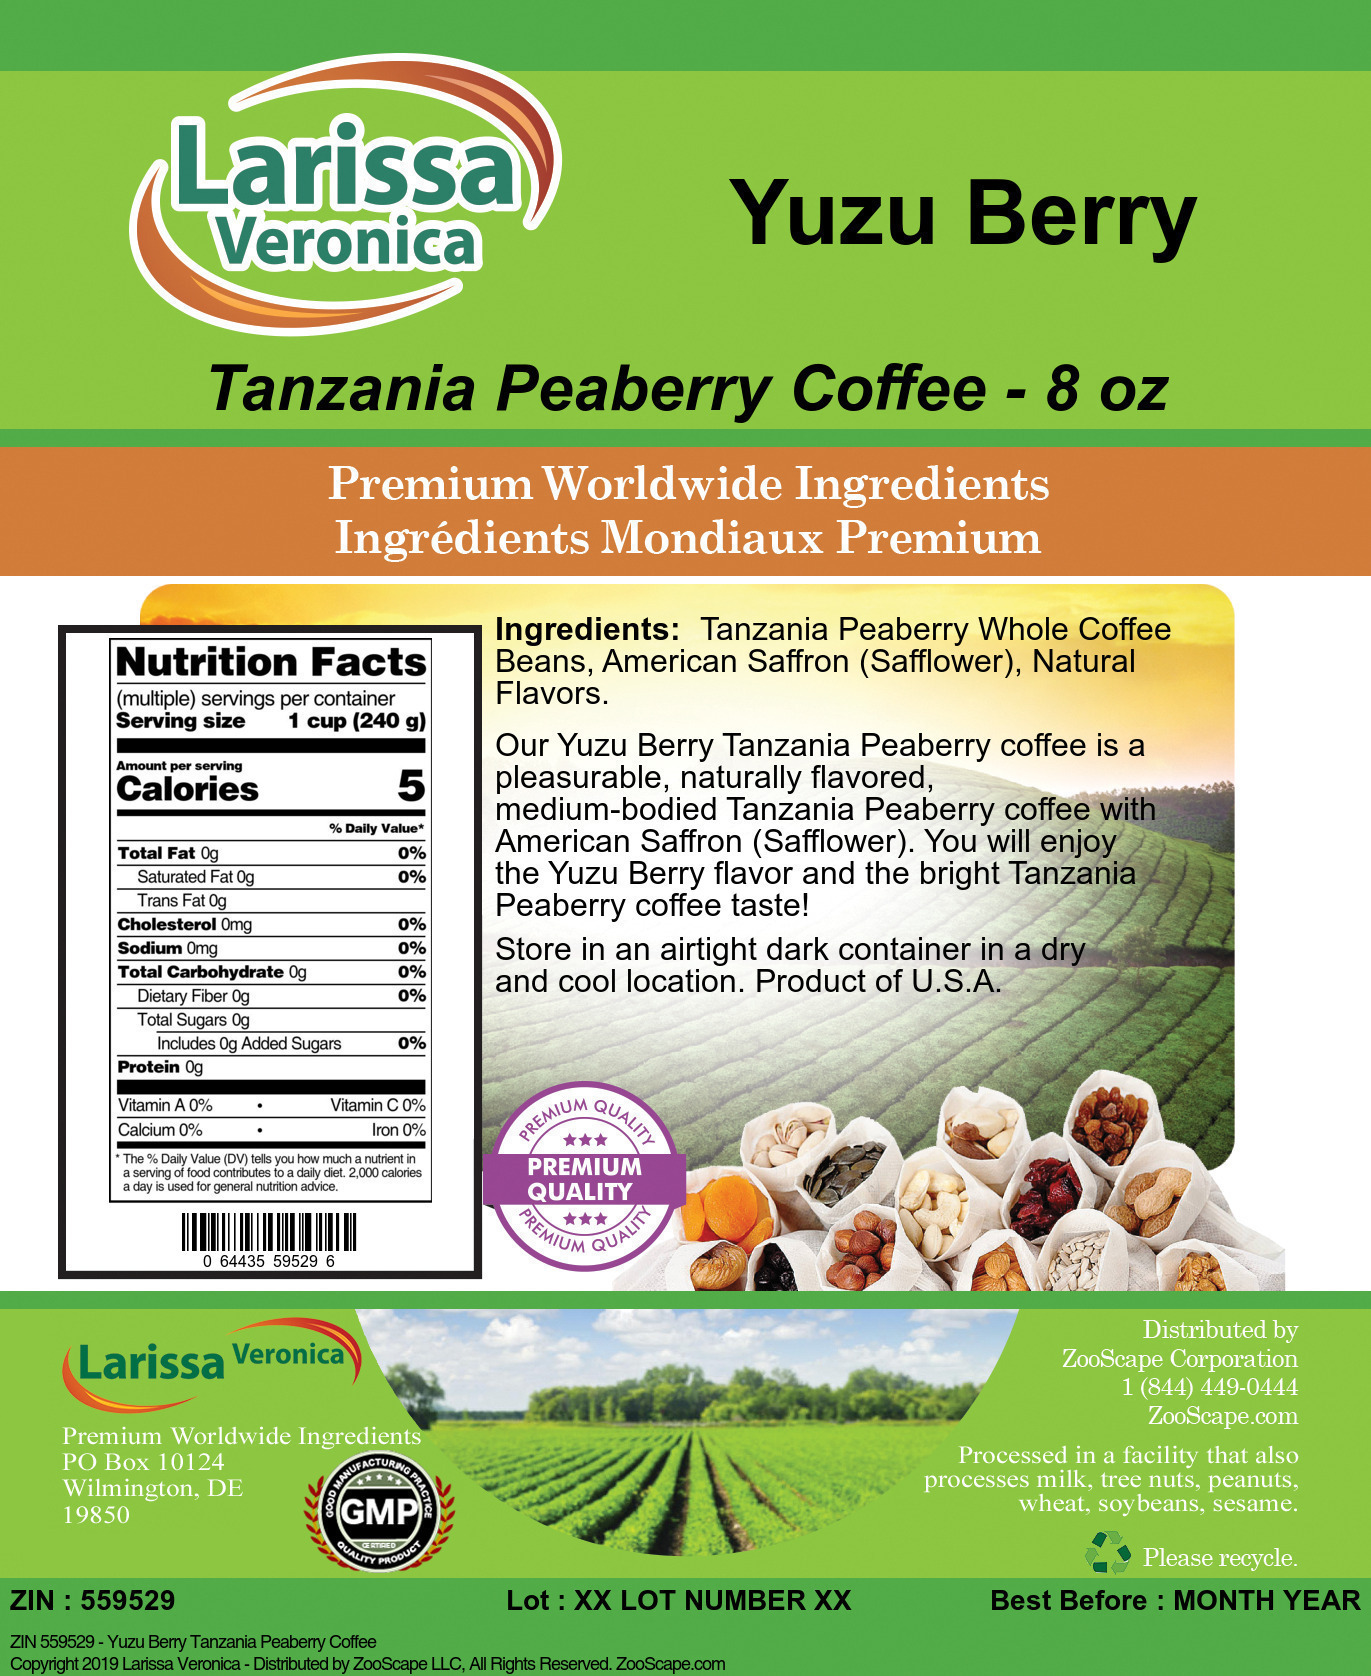 Yuzu Berry Tanzania Peaberry Coffee - Label